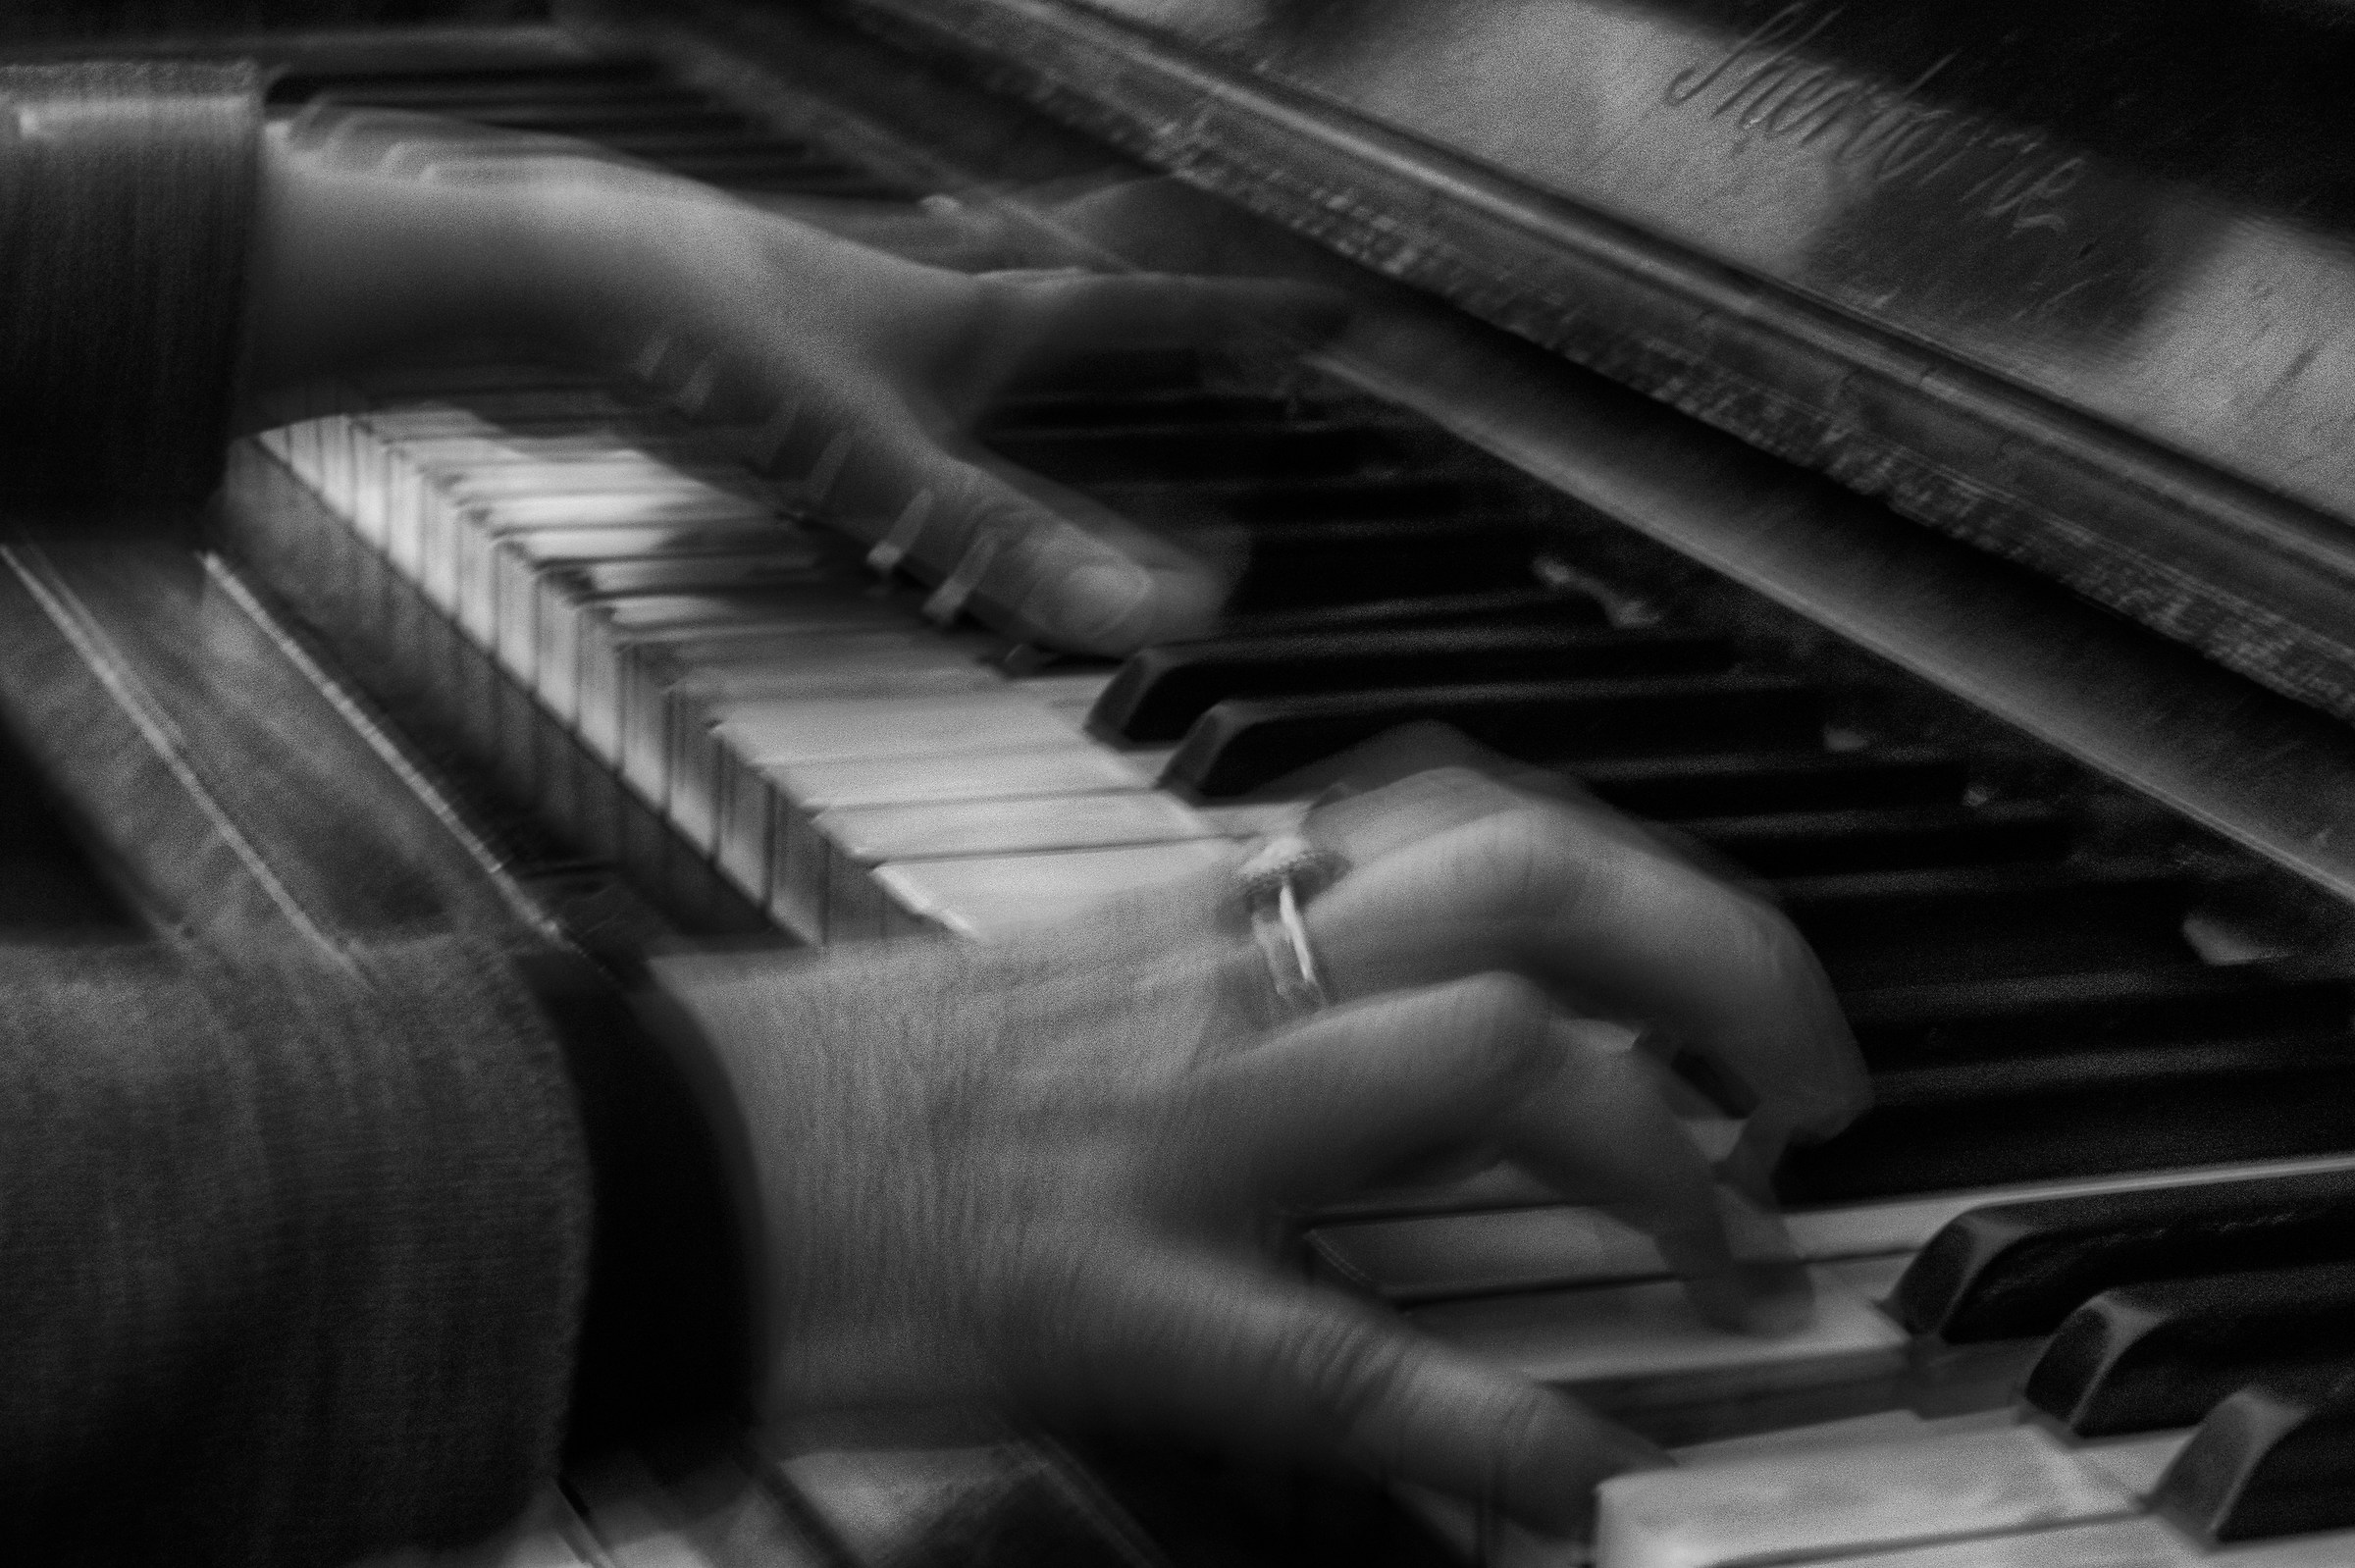 the pianist's hands...